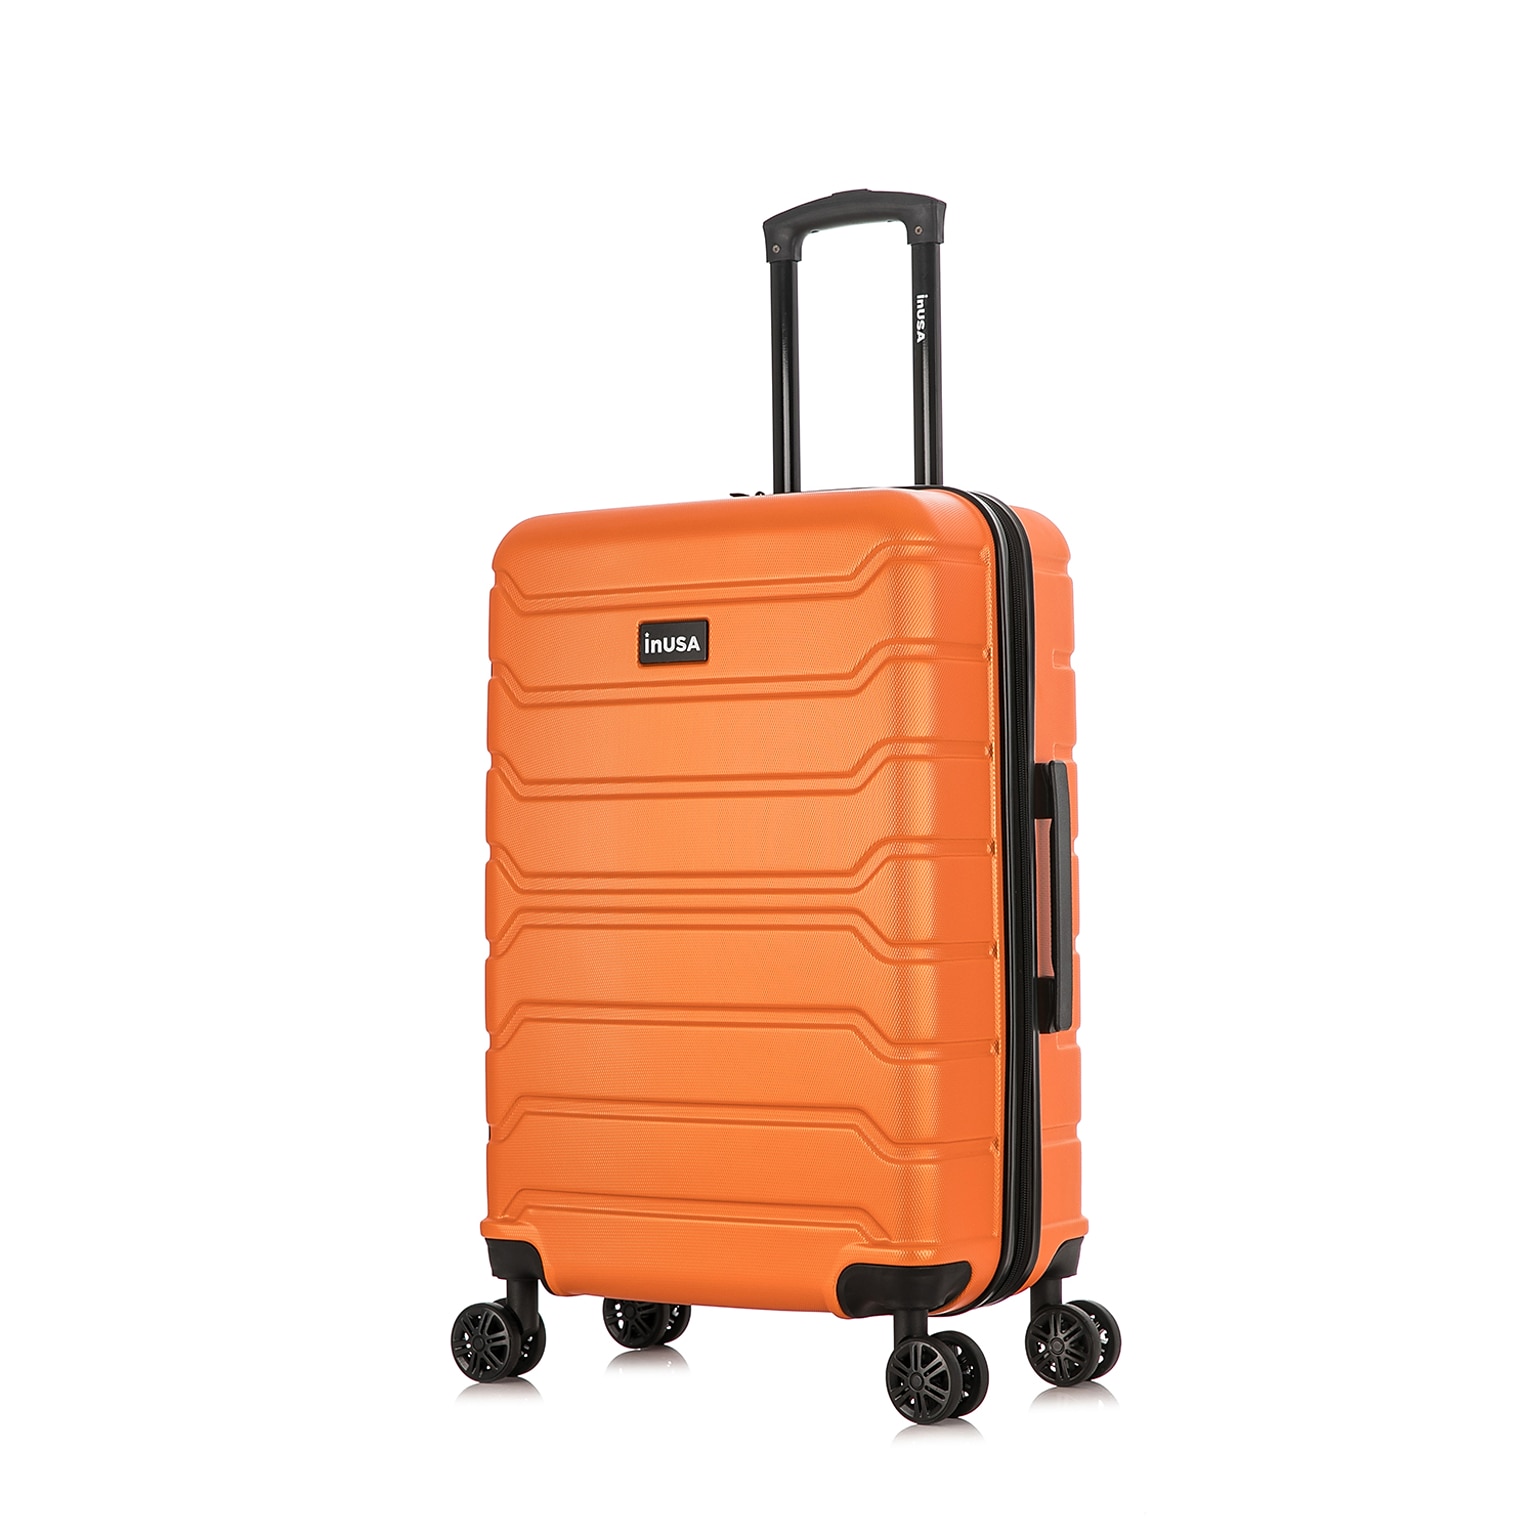 InUSA Trend 27.52 Hardside Suitcase, 4-Wheeled Spinner, Orange (IUTRE00M-ORA)